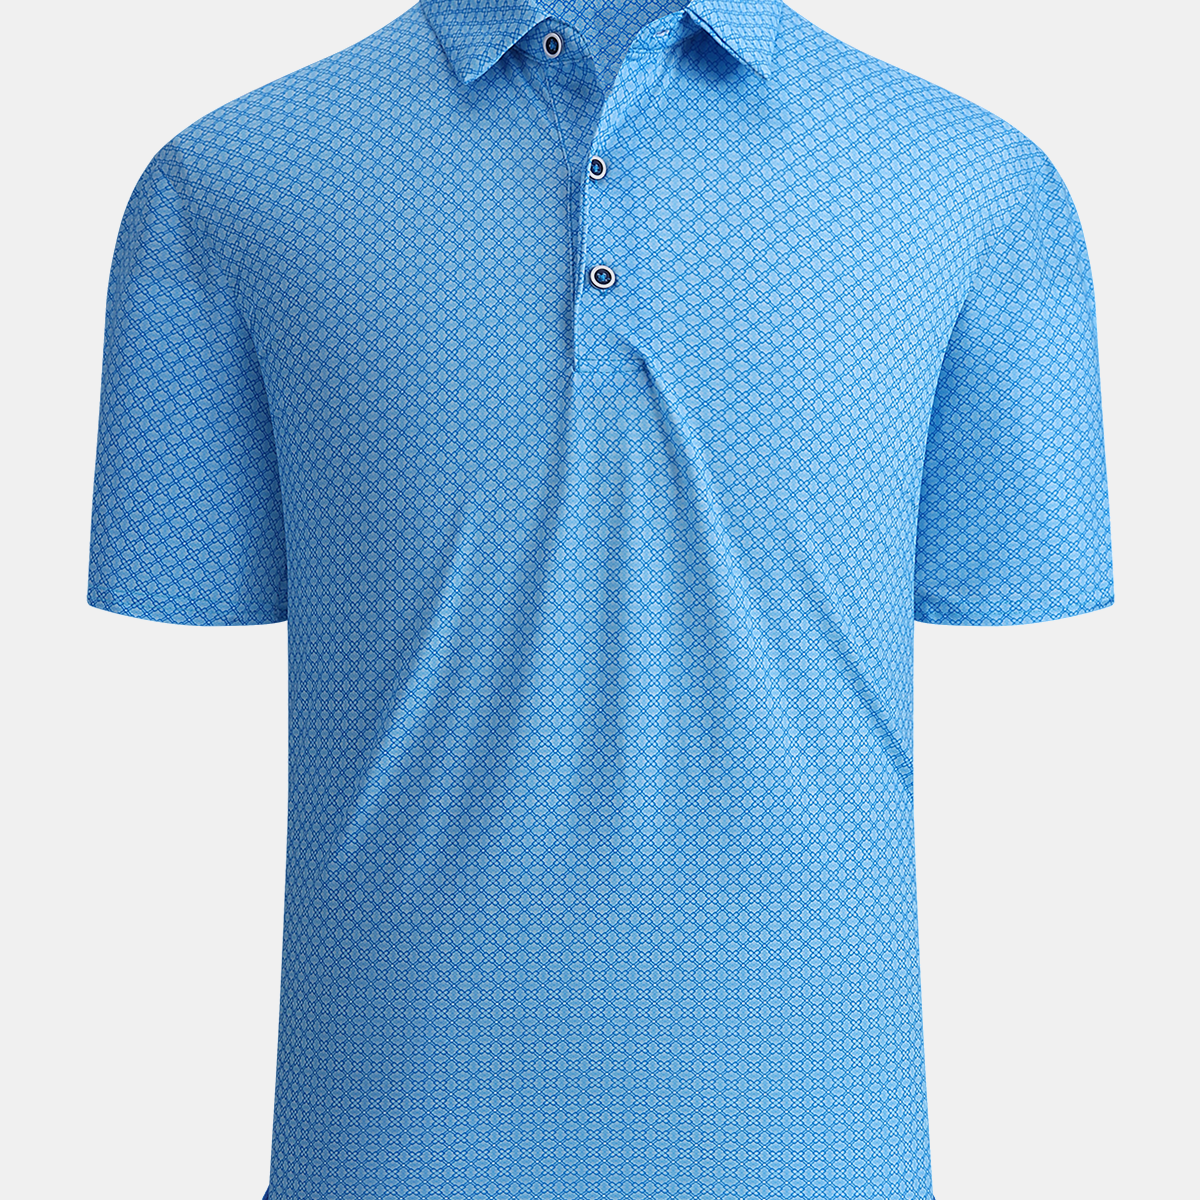 Men's Casual Golf Print Summer Moisture Wicking Sports Short Sleeve Blue Polo Shirt